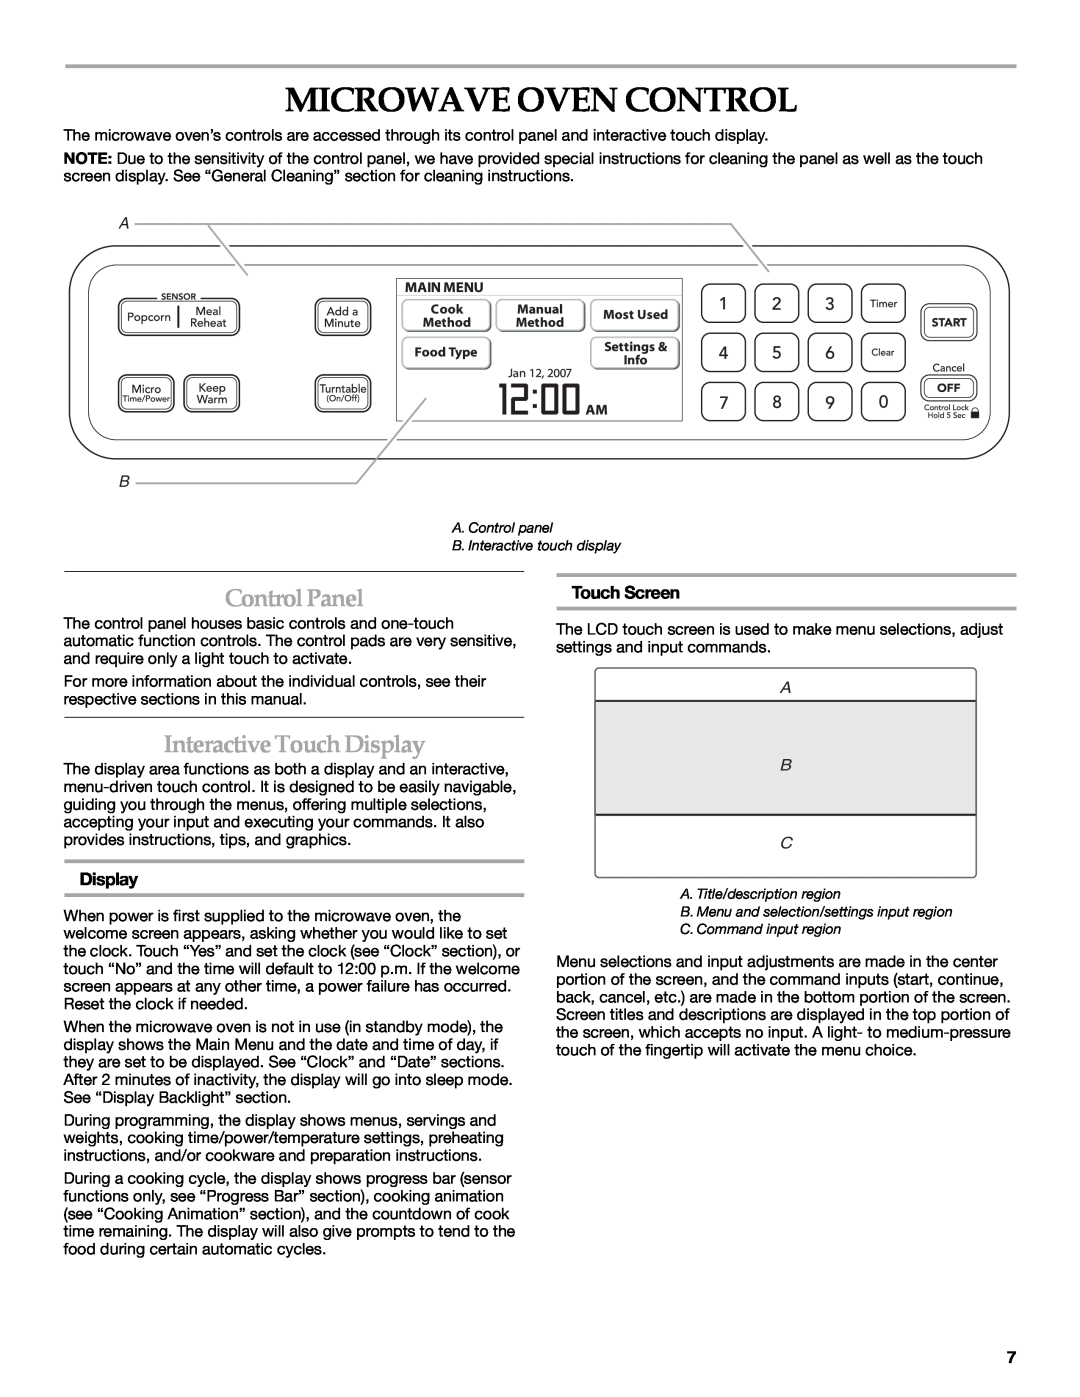 KitchenAid KHMS2056SBL manual Microwave Oven Control, ControlPanel, InteractiveTouchDisplay, A B C 